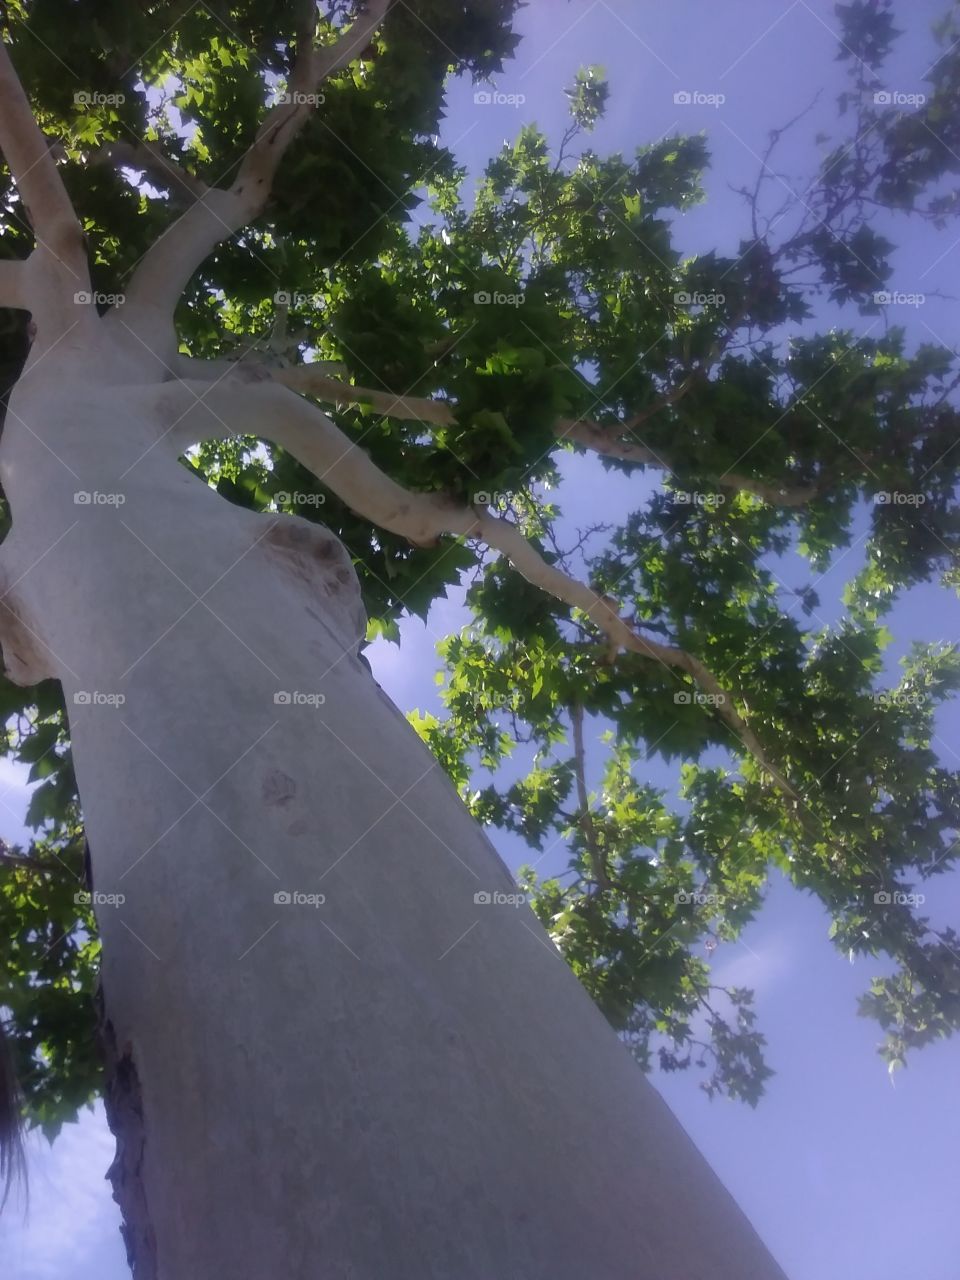 Beautiful Shot 💕 Hearts in Trees